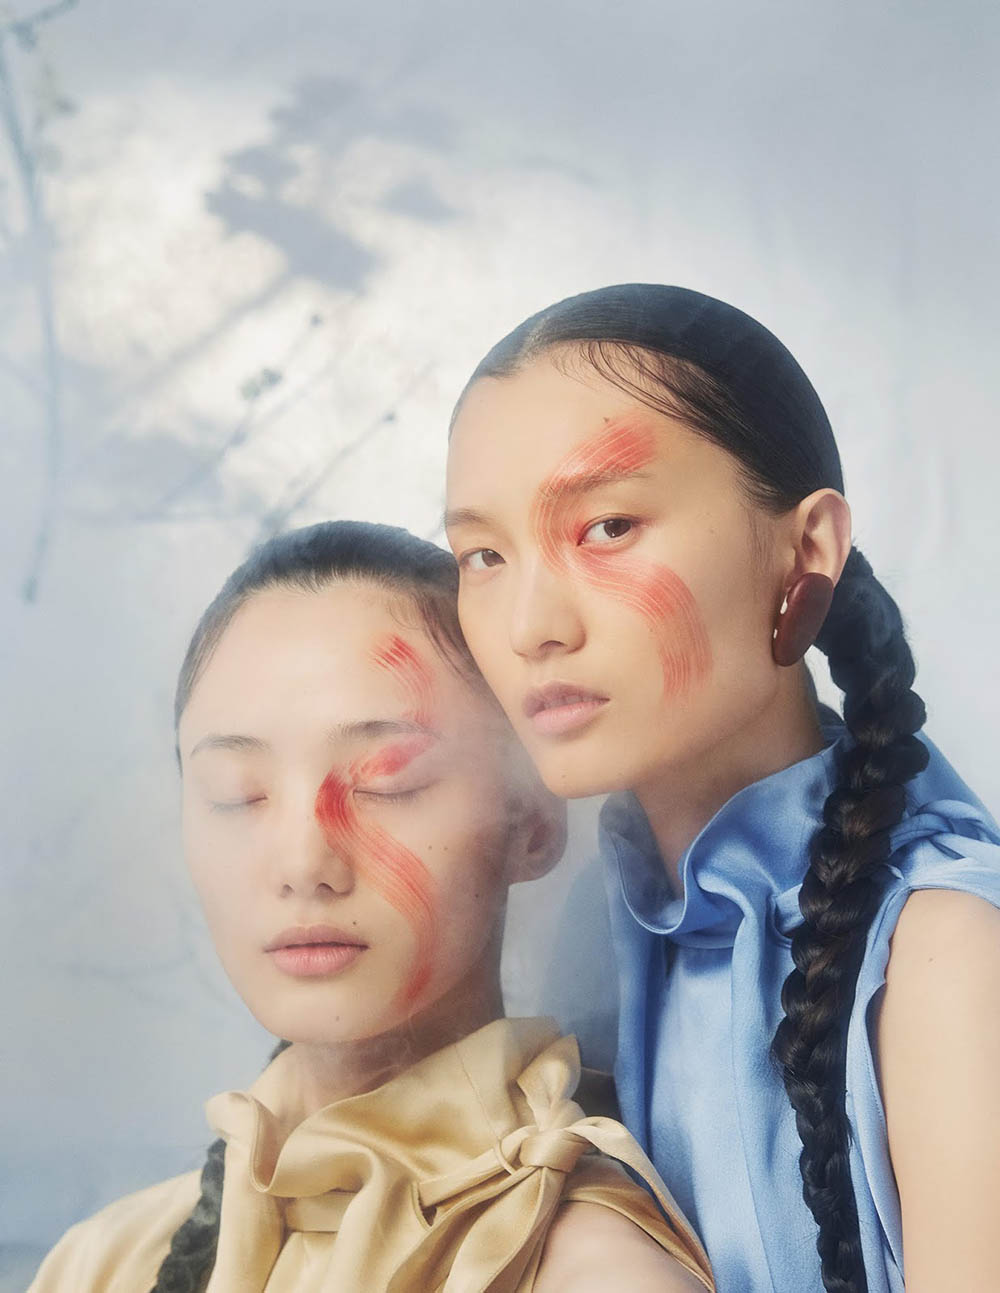 Chunjie Liu and Liu Huan by Ruo Bing Li for Harper’s Bazaar China October 2019